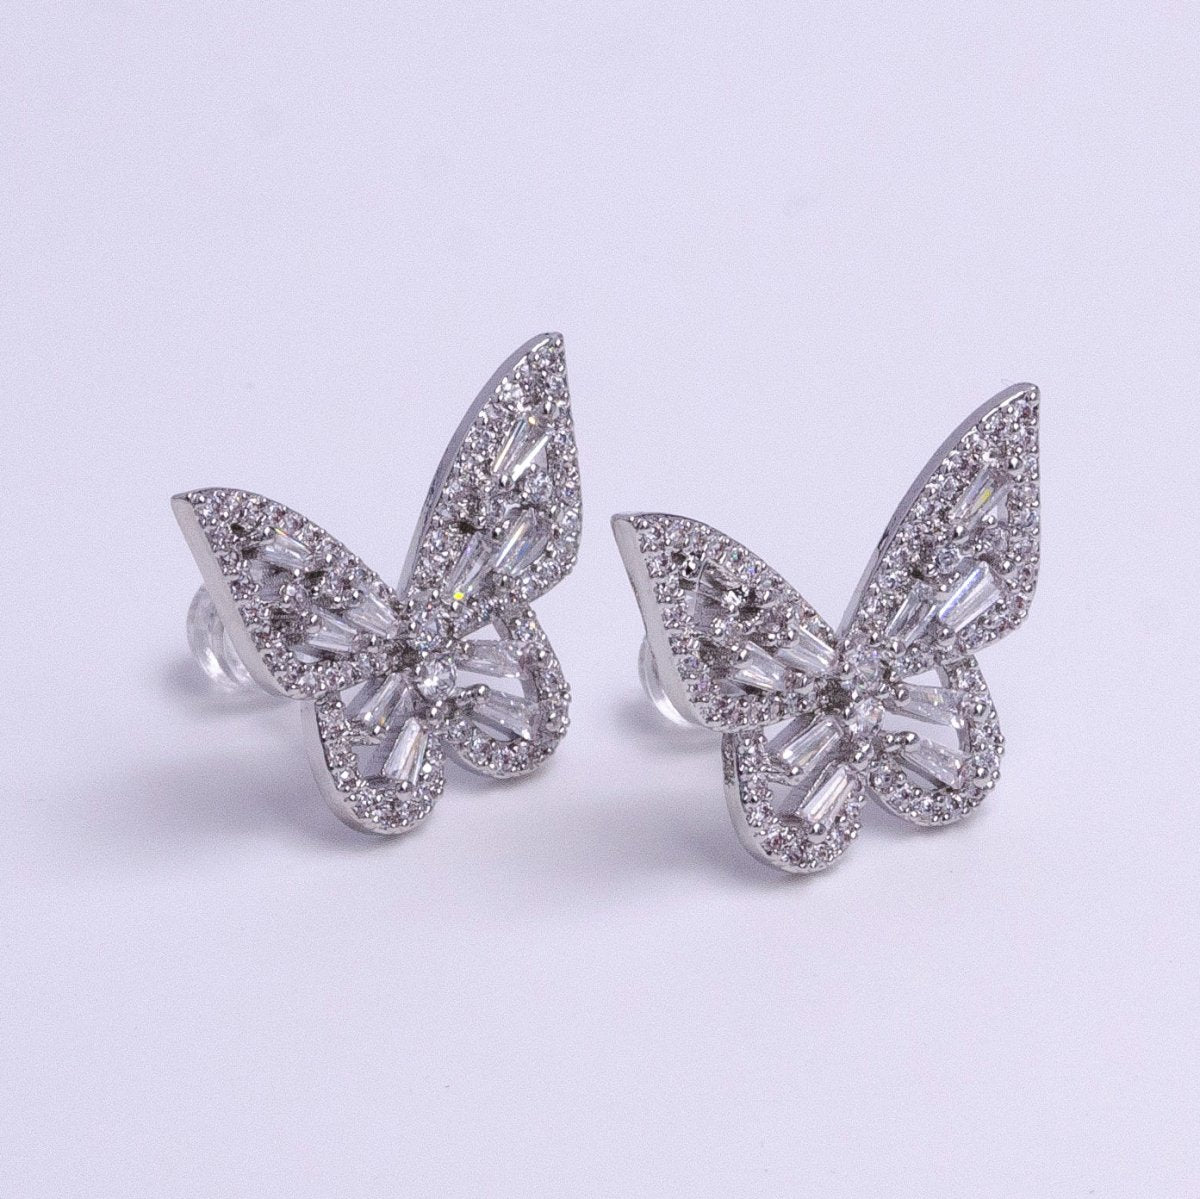 Gold, Silver Butterfly Mariposa Open Baguette Micro Paved CZ Wings Stud Earrings | AB-673 Y-893 - DLUXCA